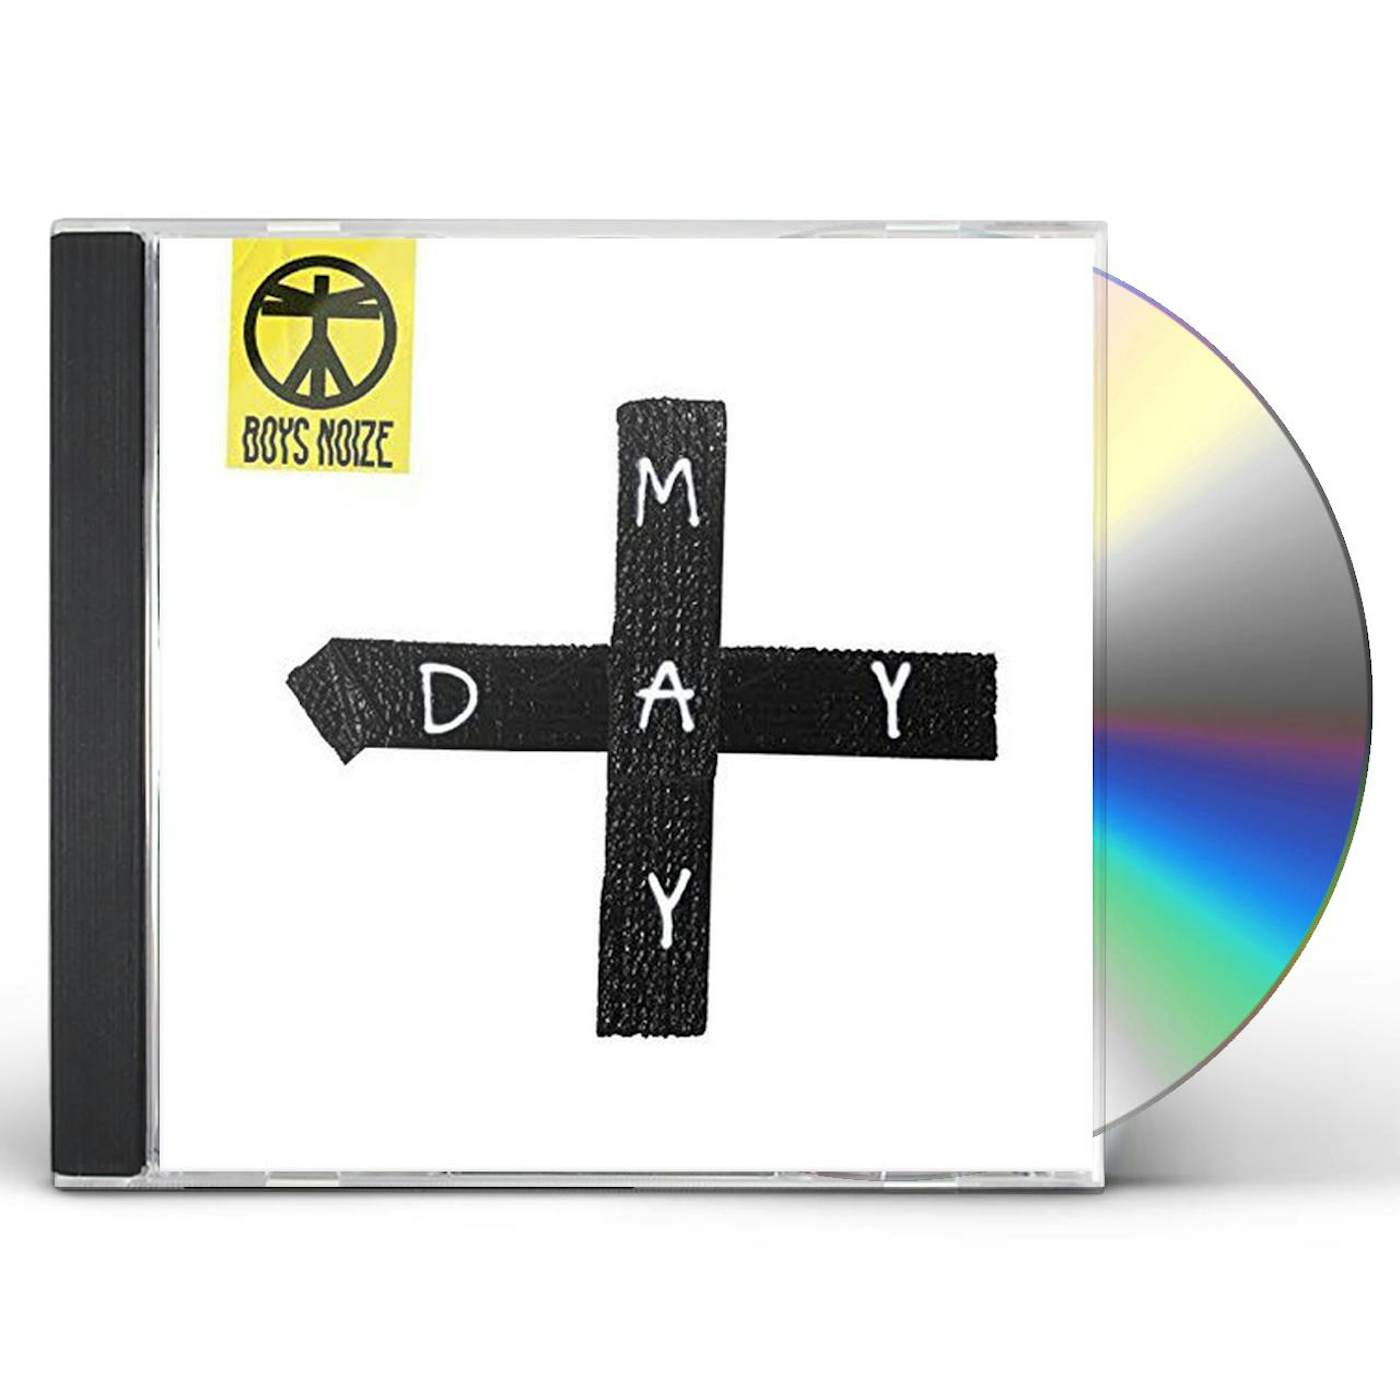 Boys Noize MAYDAY CD